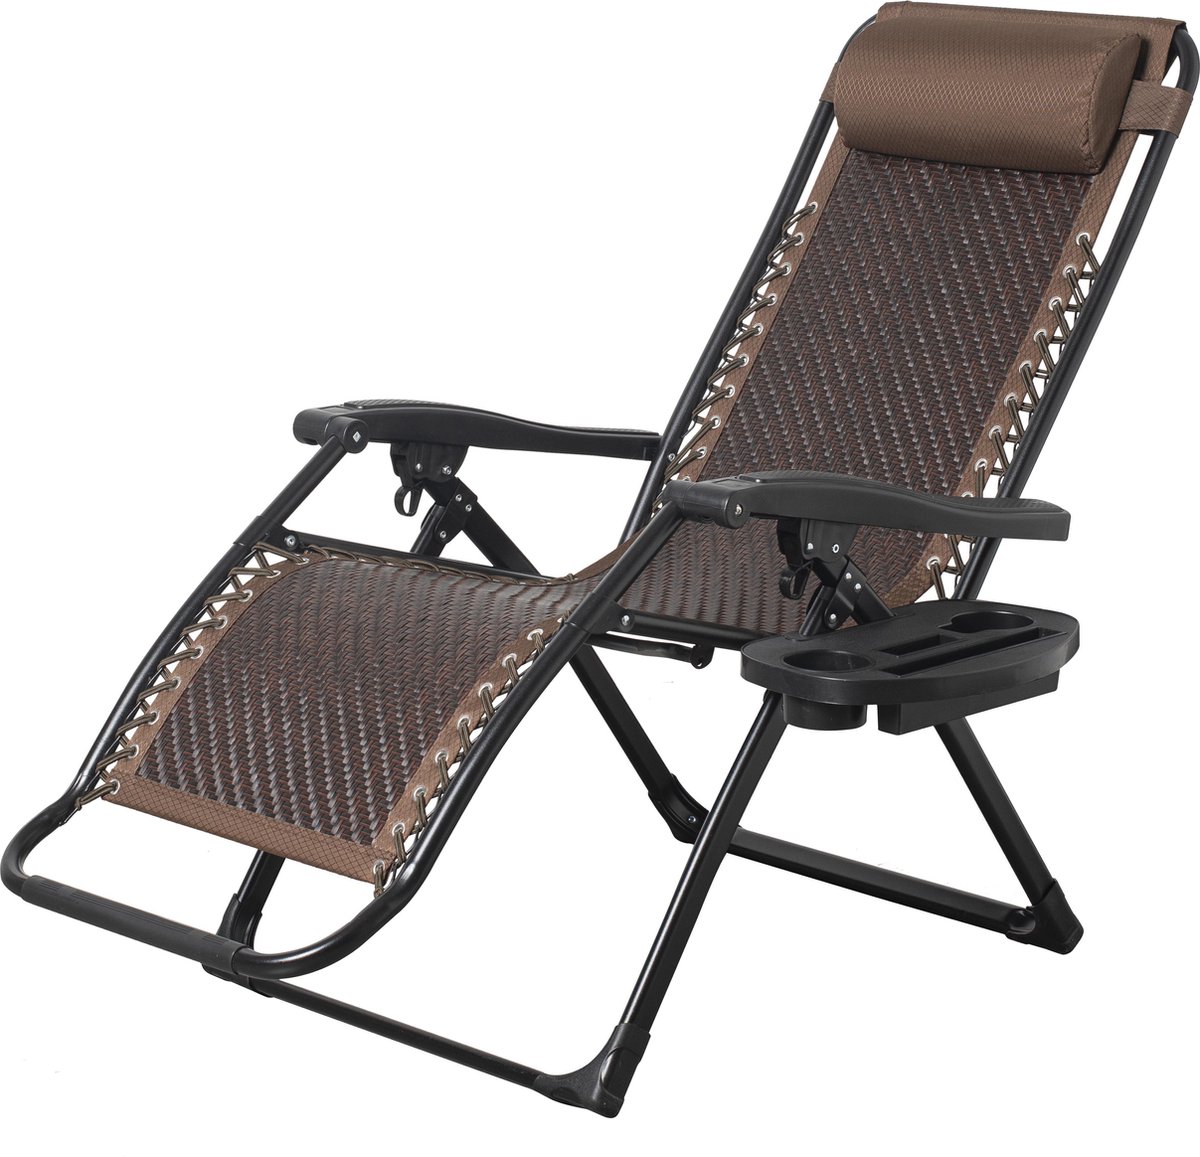 Brulo - ligstoel tuin - ligstoelen - strandstoel opvouwbaar - tuinstoel - incl tafel en hoofdkussen – rattan